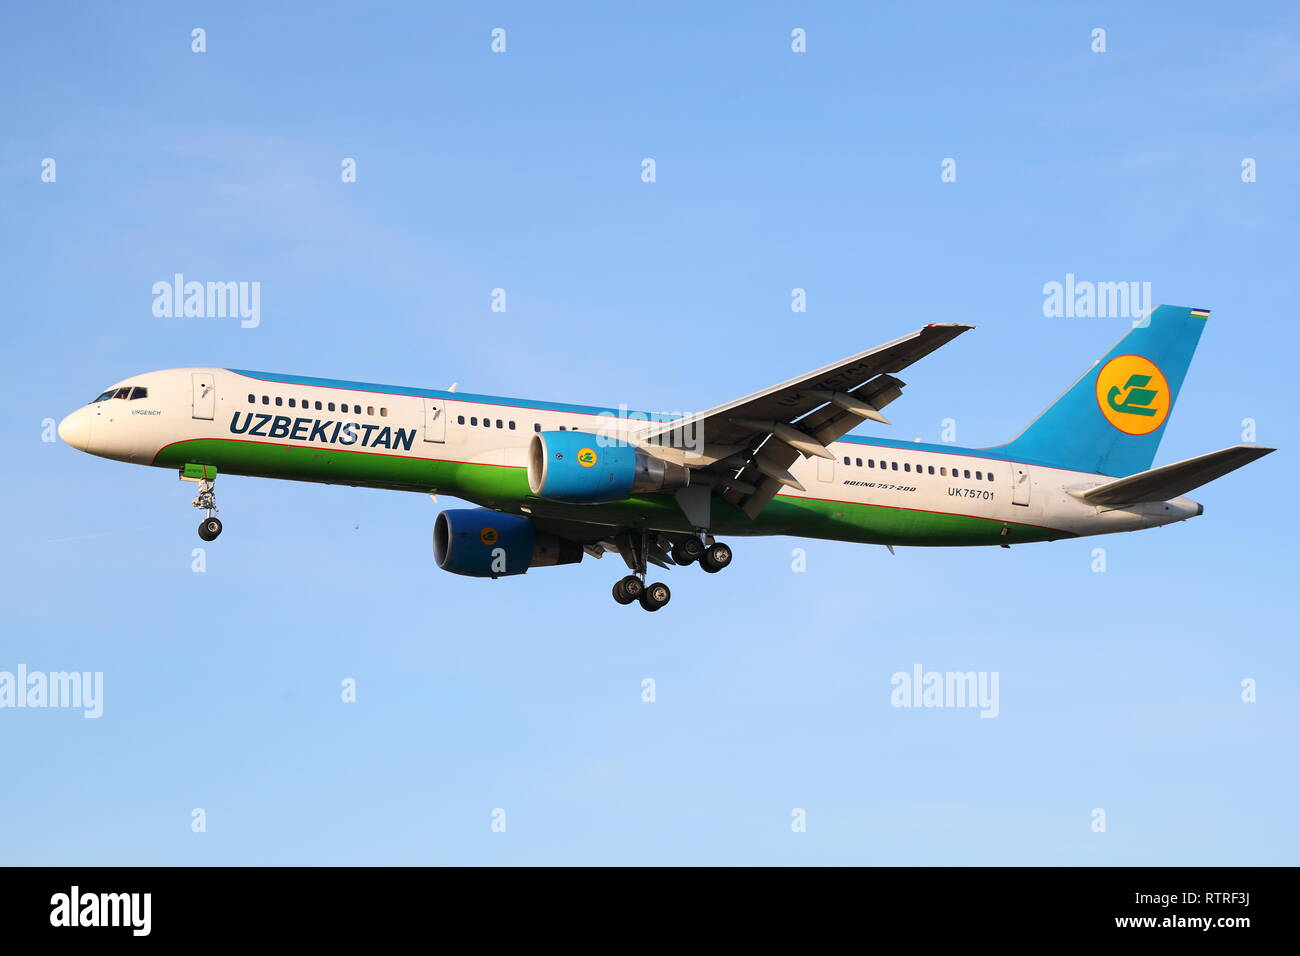 Uzbekistan Airways Boeing 757 UK75701 landing at London Heathrow Airport, UK Stock Photo